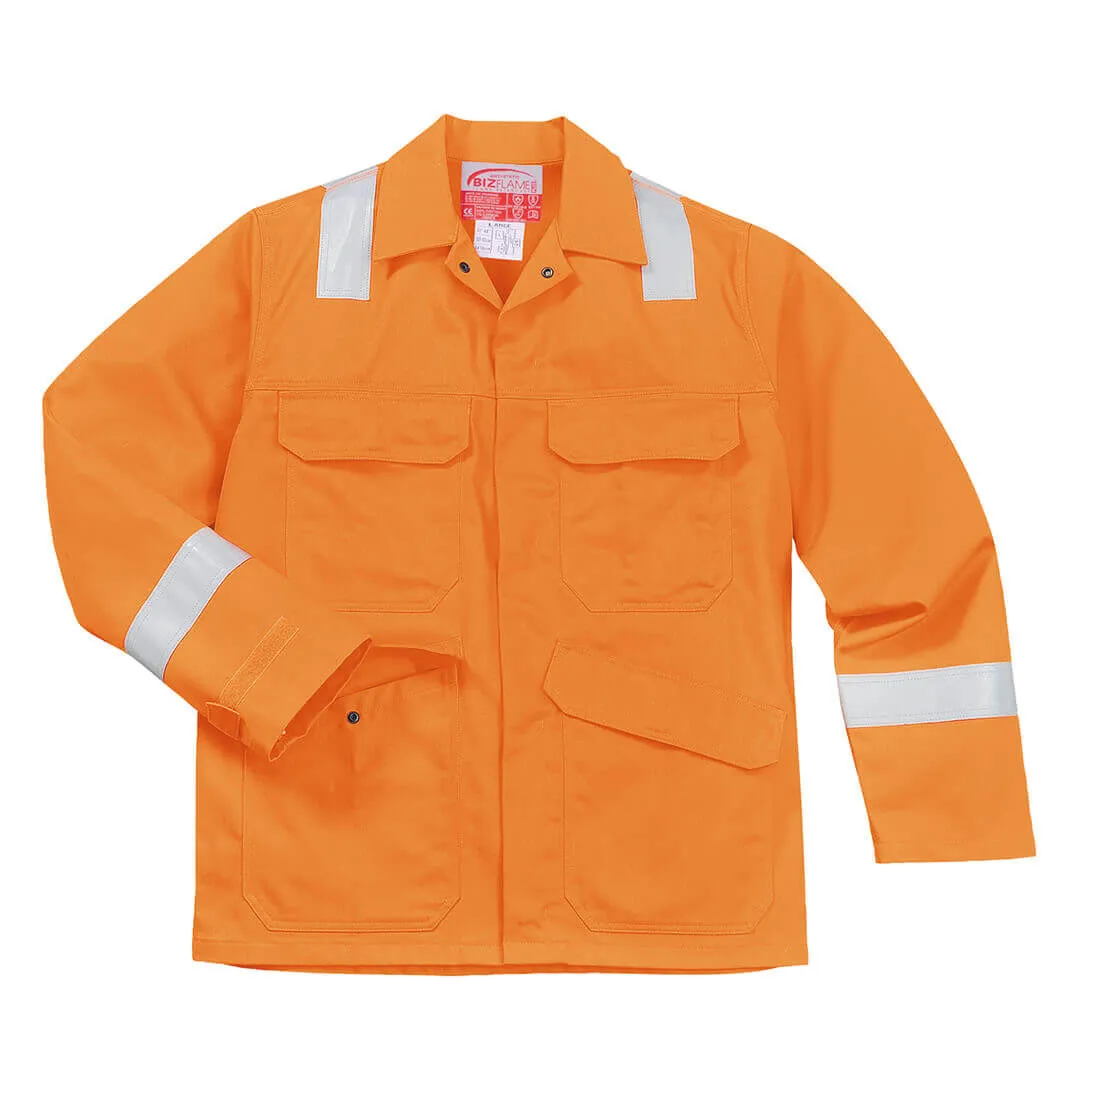 Biz Flame Mens Flame Resistant Jacket - Orange, M